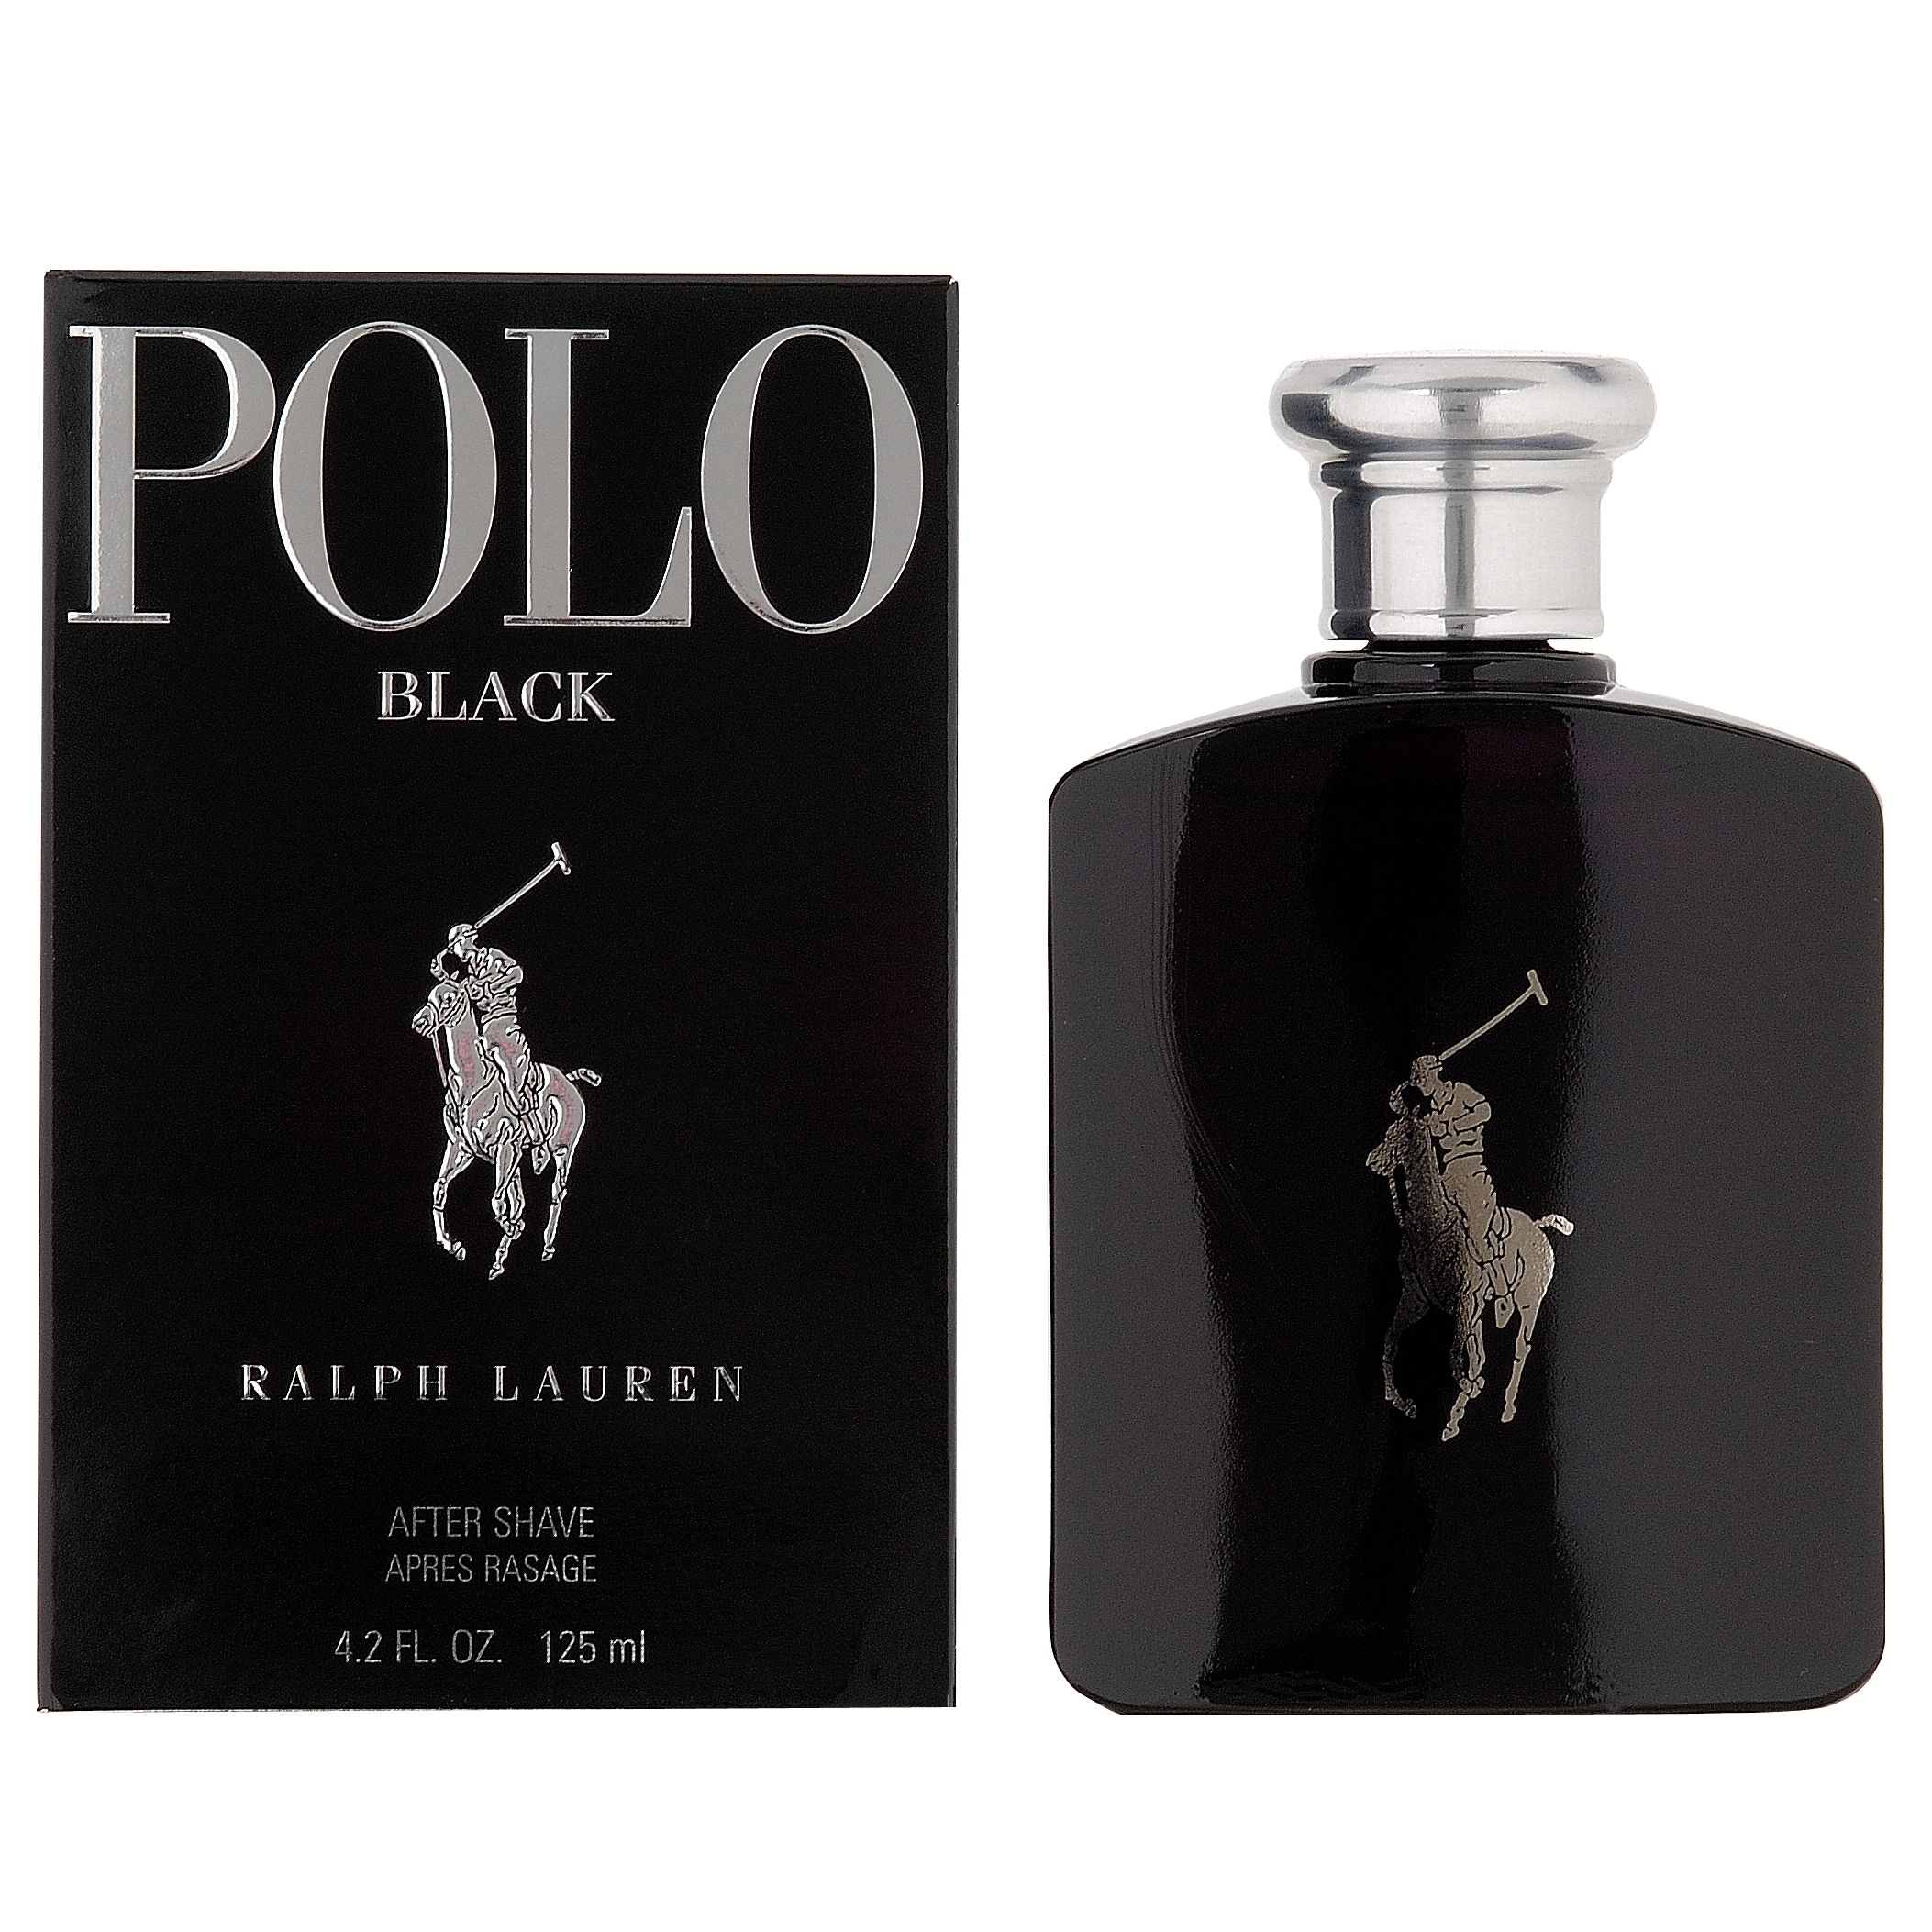 Polo Ralph Lauren Black Aftershave, 125ml